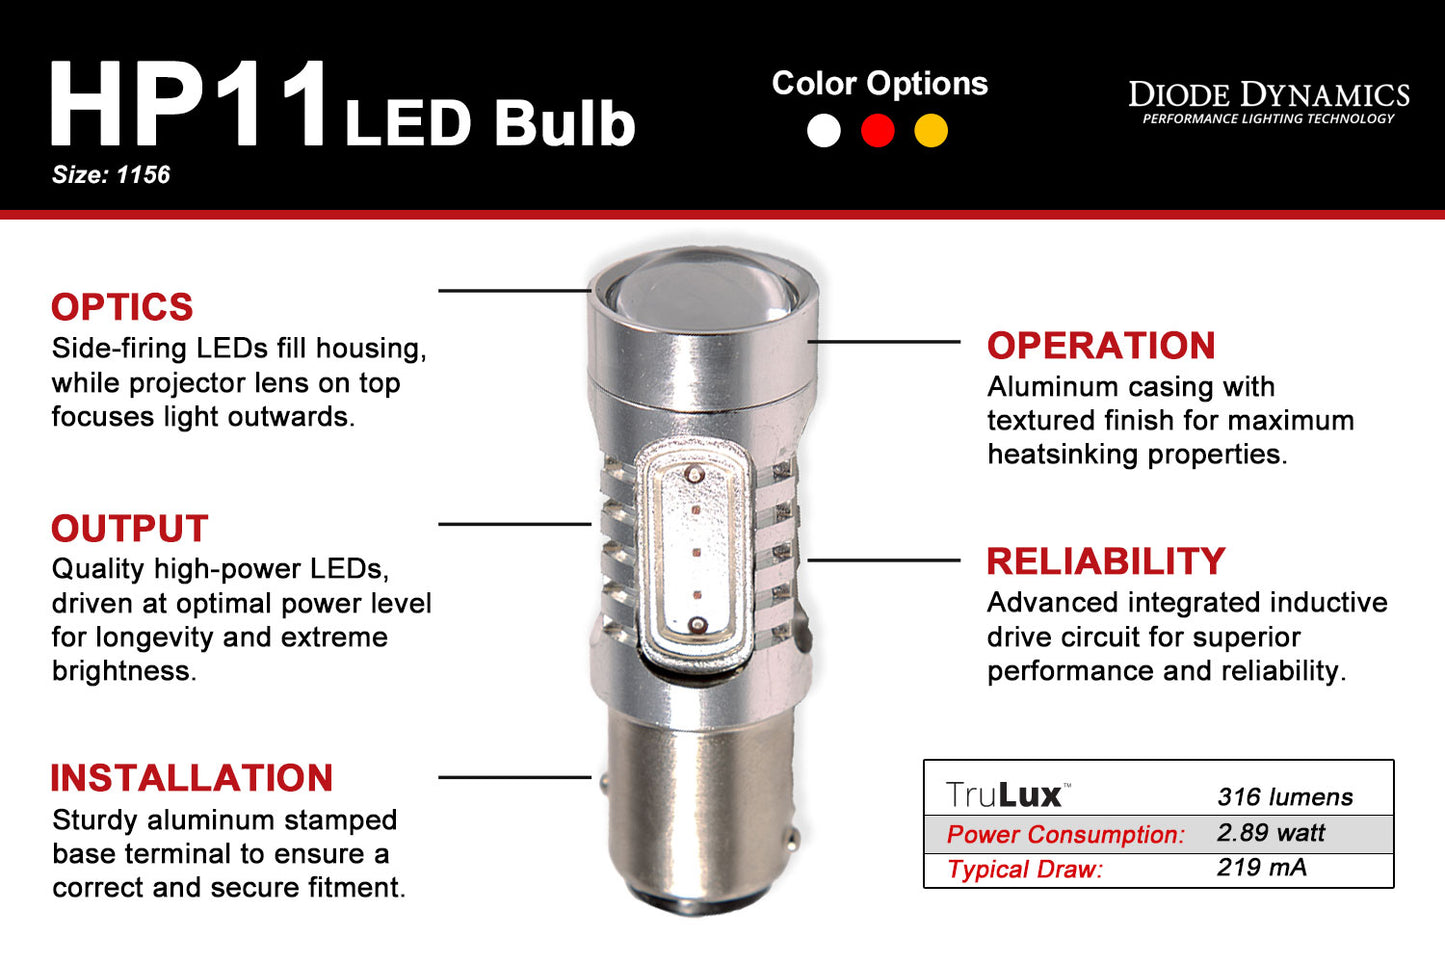 1156 LED Bulb HP11 LED Red Pair Diode Dynamics